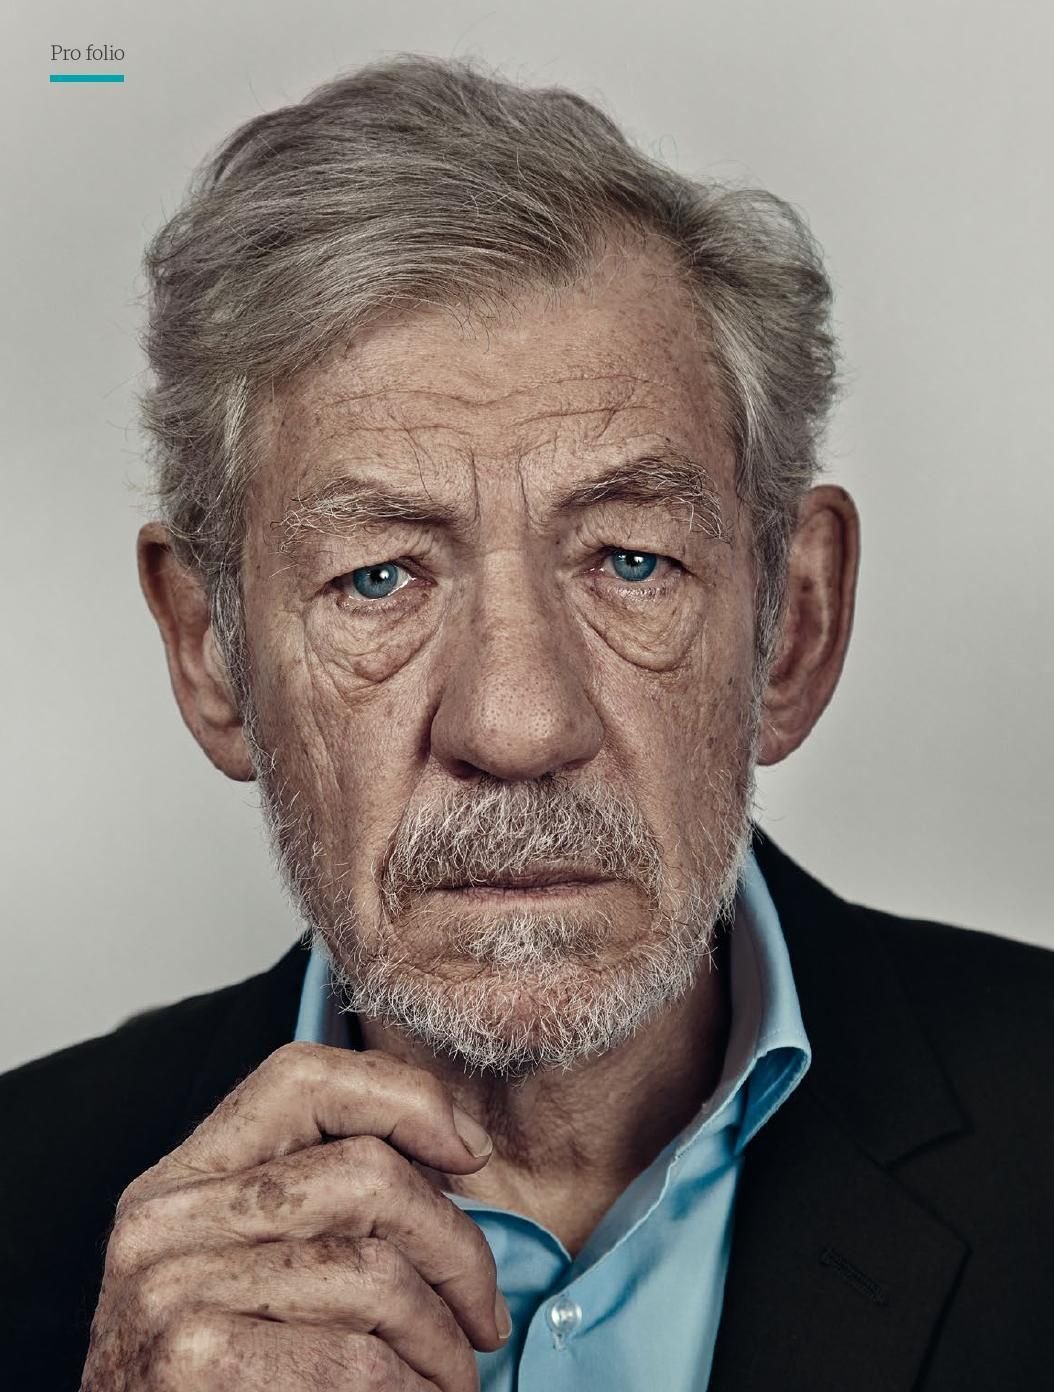 Old man face. Иэн МАККЕЛЛЕН. Old man. Old man portrait.